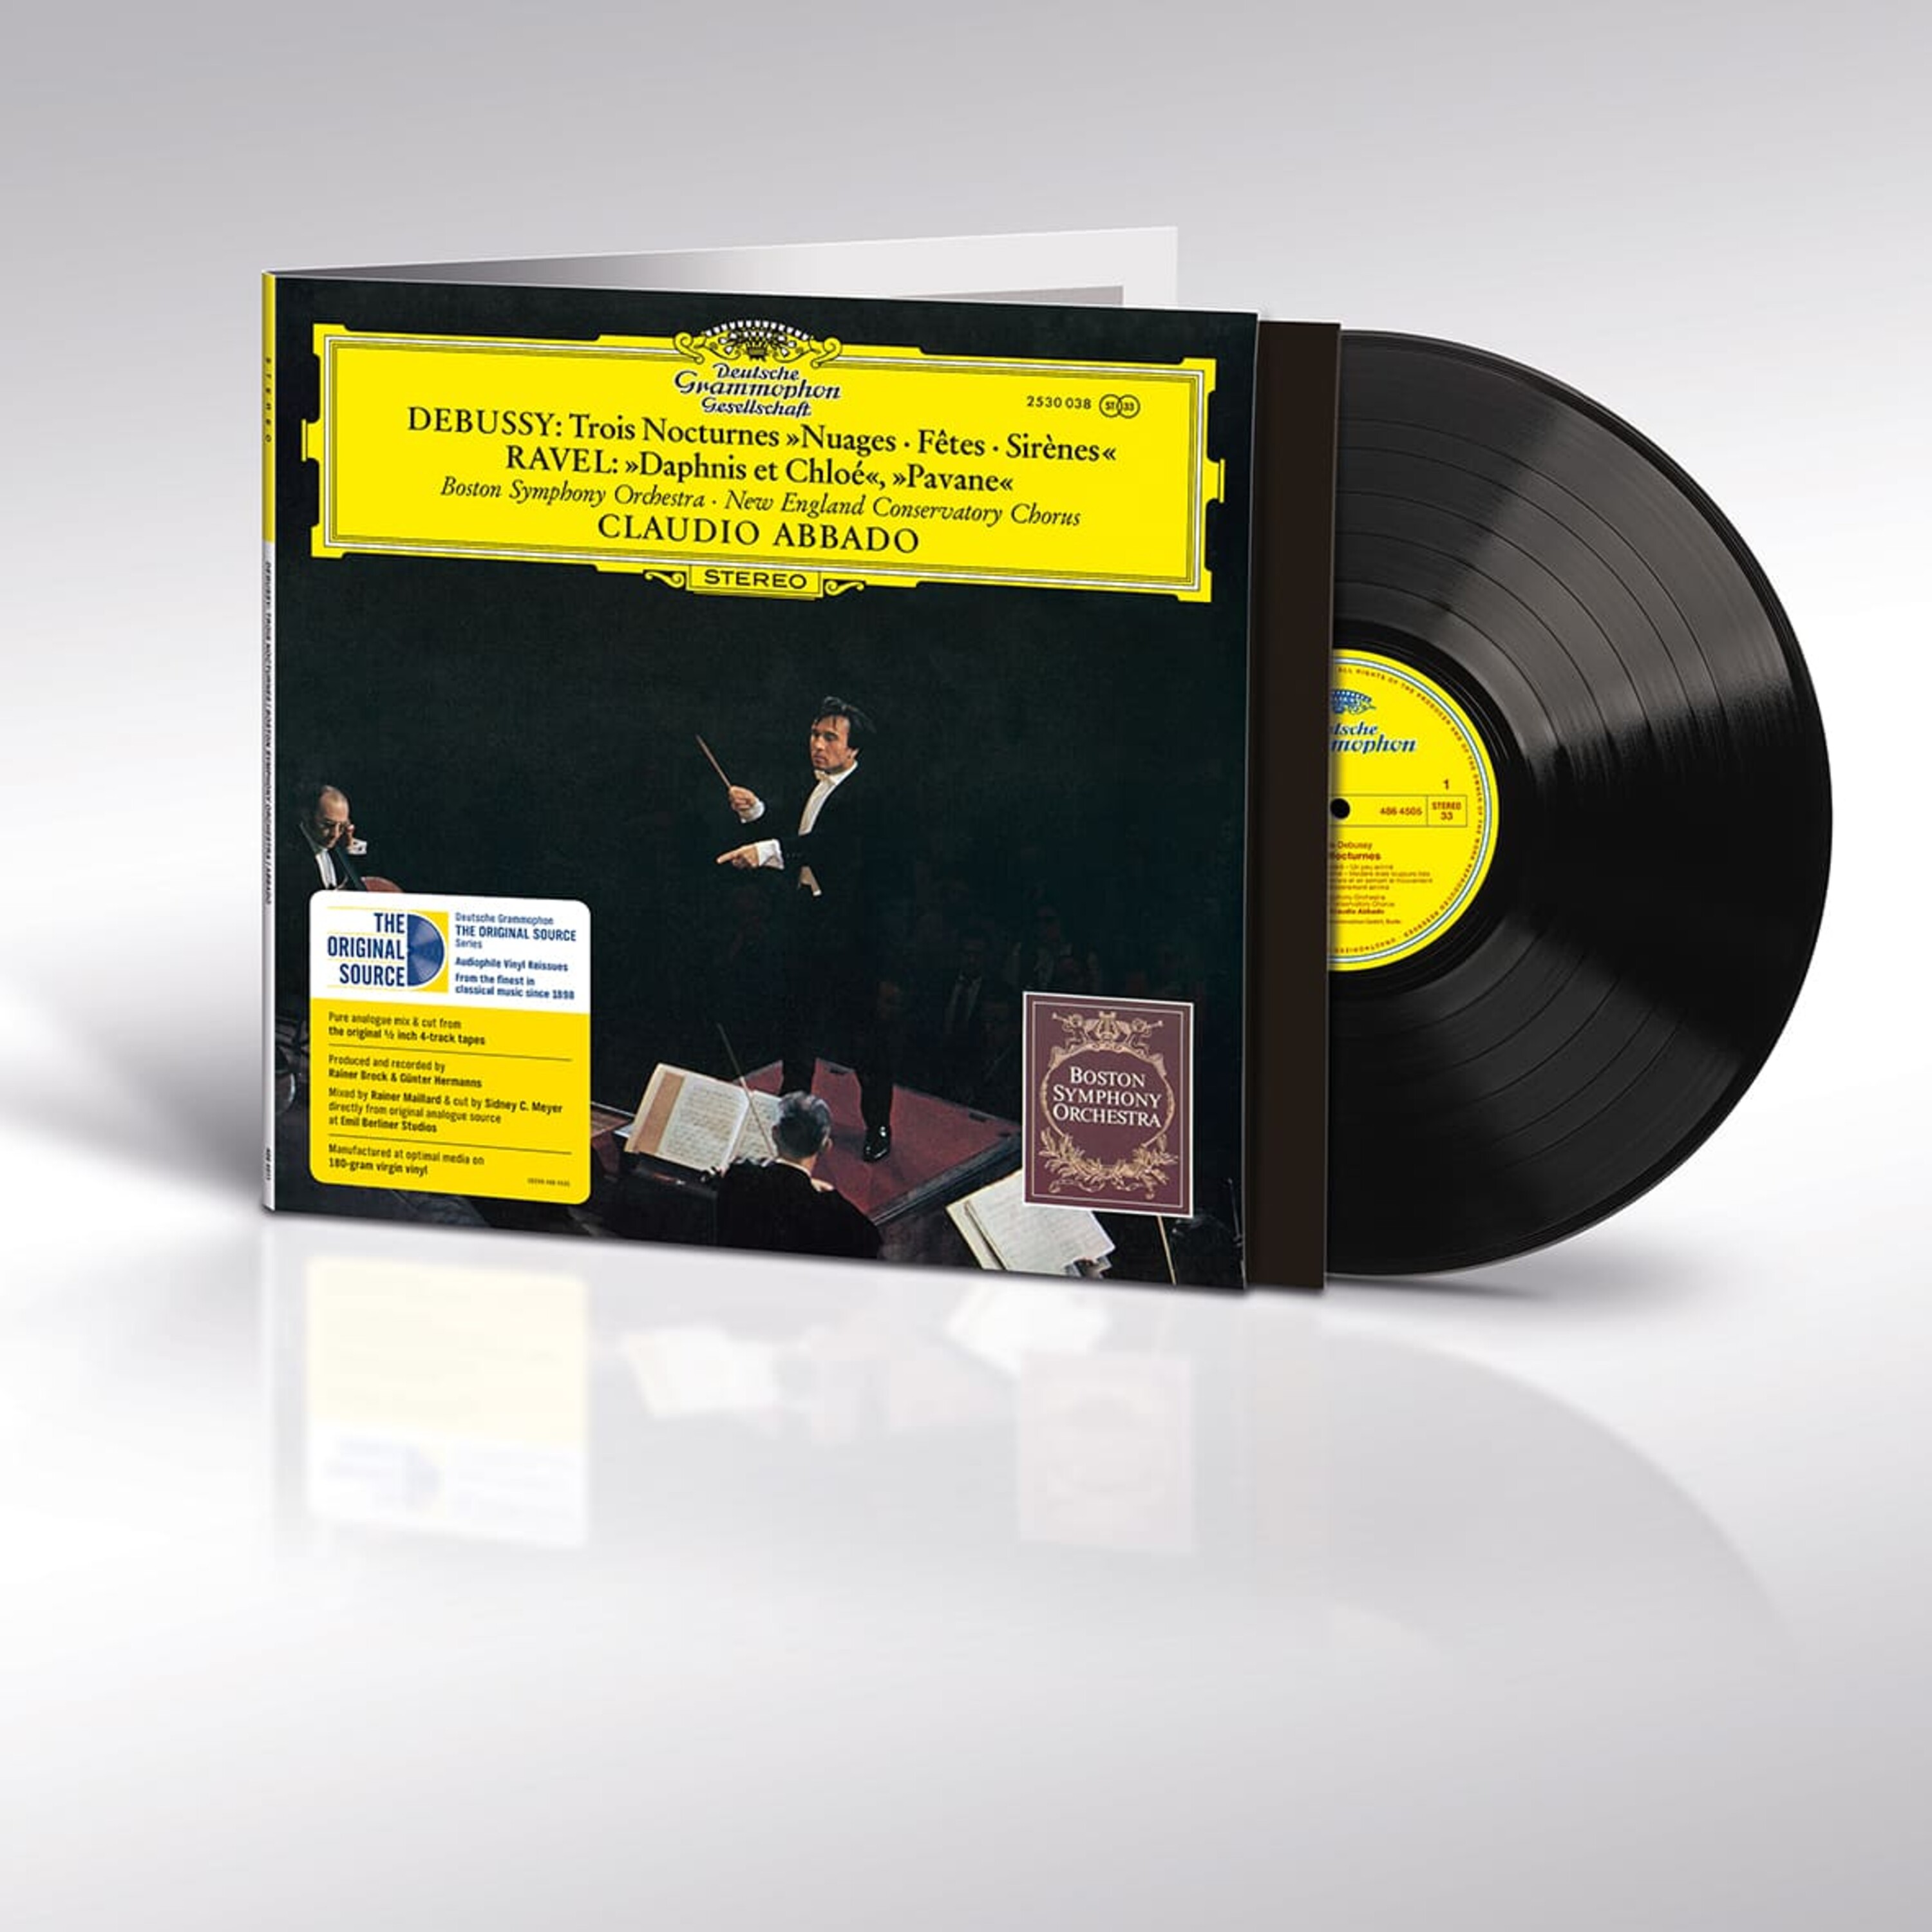 Debussy: Nocturnes  Ravel: Daphnis et Chloe Suite 2 Claudio Abbado DG Original Source